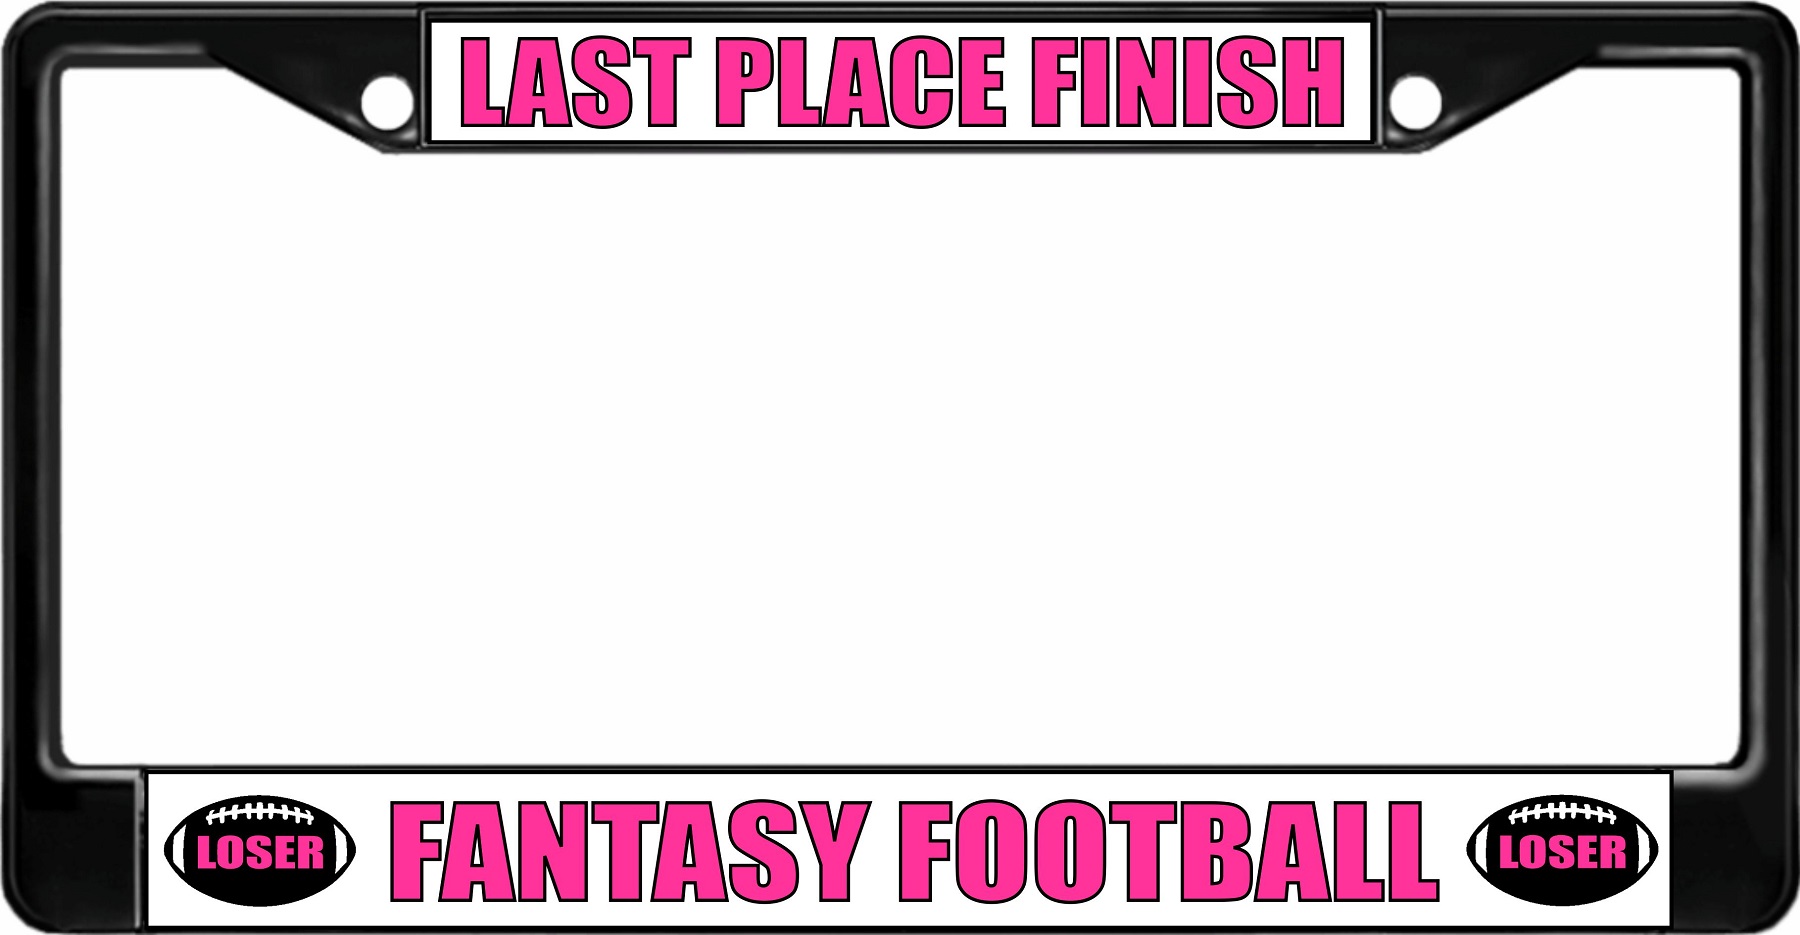 Last Place Finish Fantasy FOOTBALL Black License Plate Frame